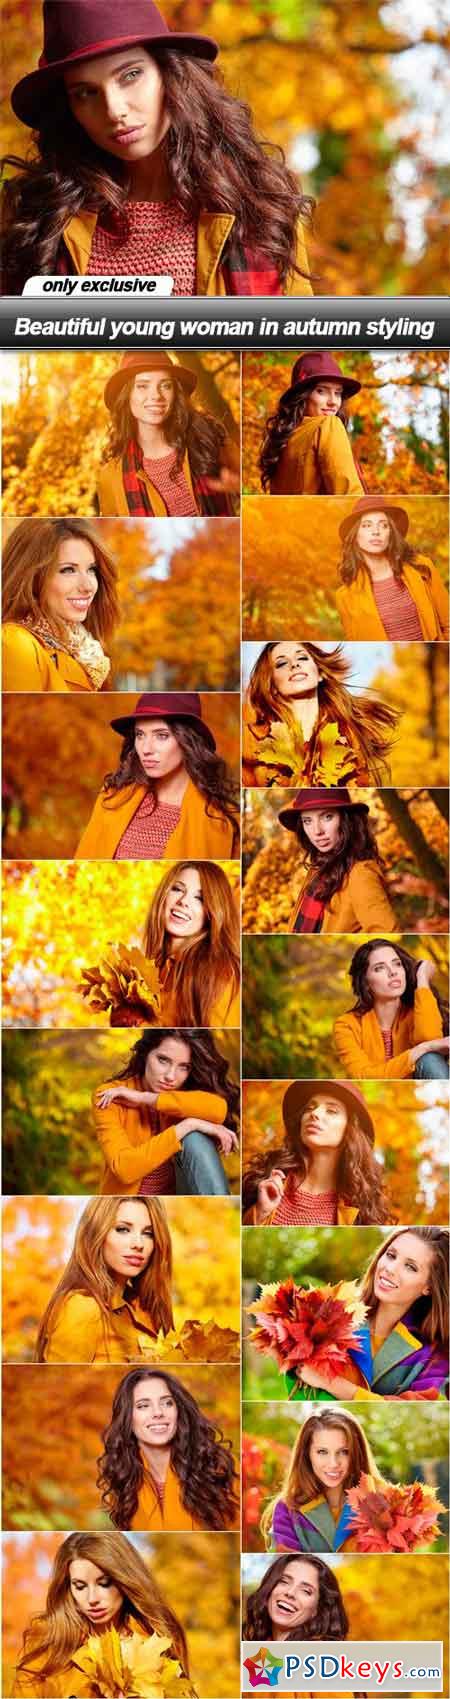 Beautiful young woman in autumn styling - 18 UHQ JPEG